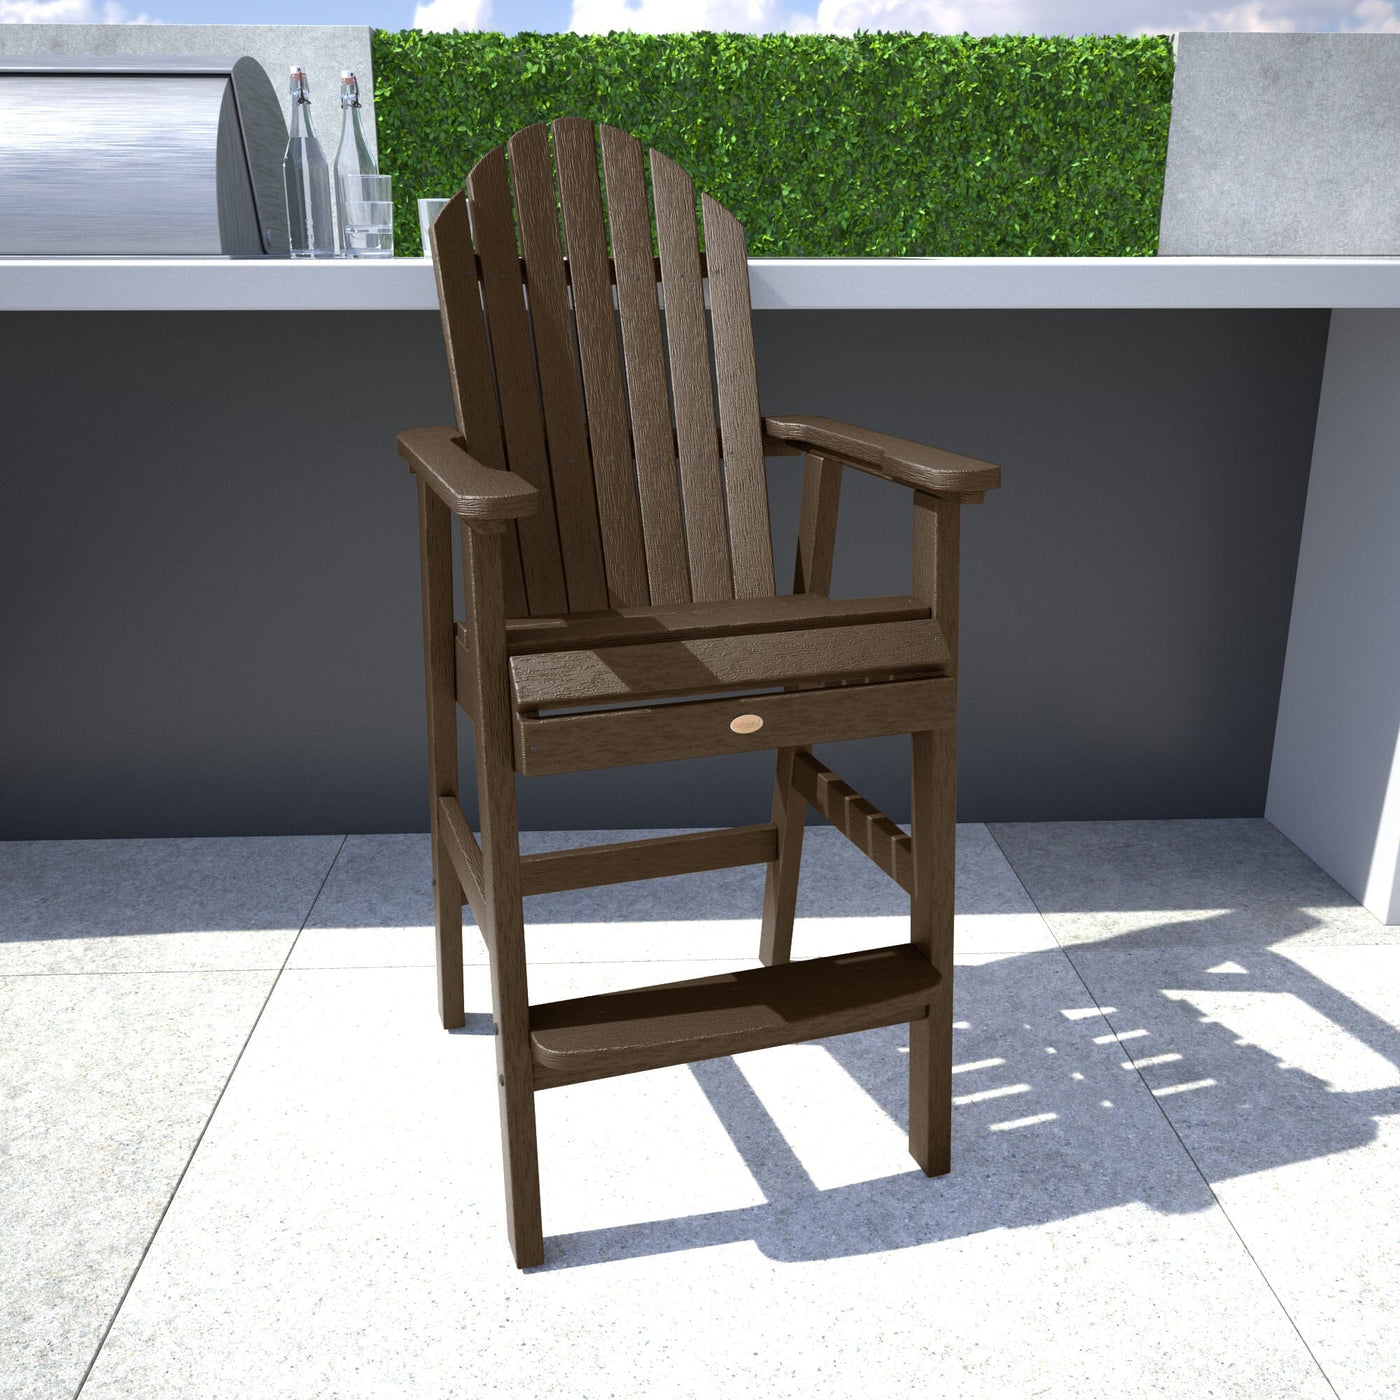 Brown Hamilton Bar Height Chair in outdoor kitchen